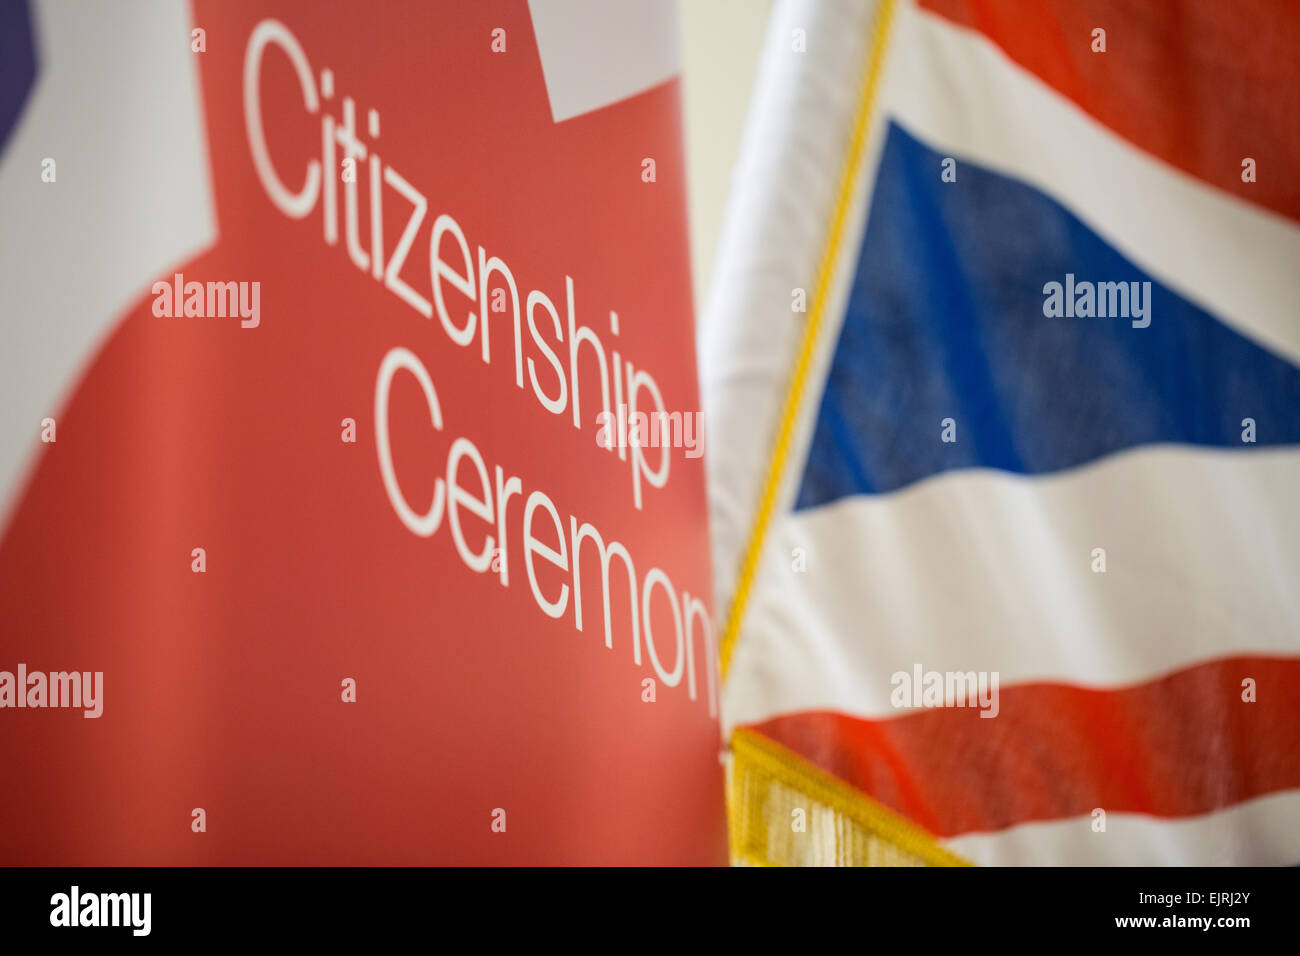 British citizenship ceremony signs Stock Photo